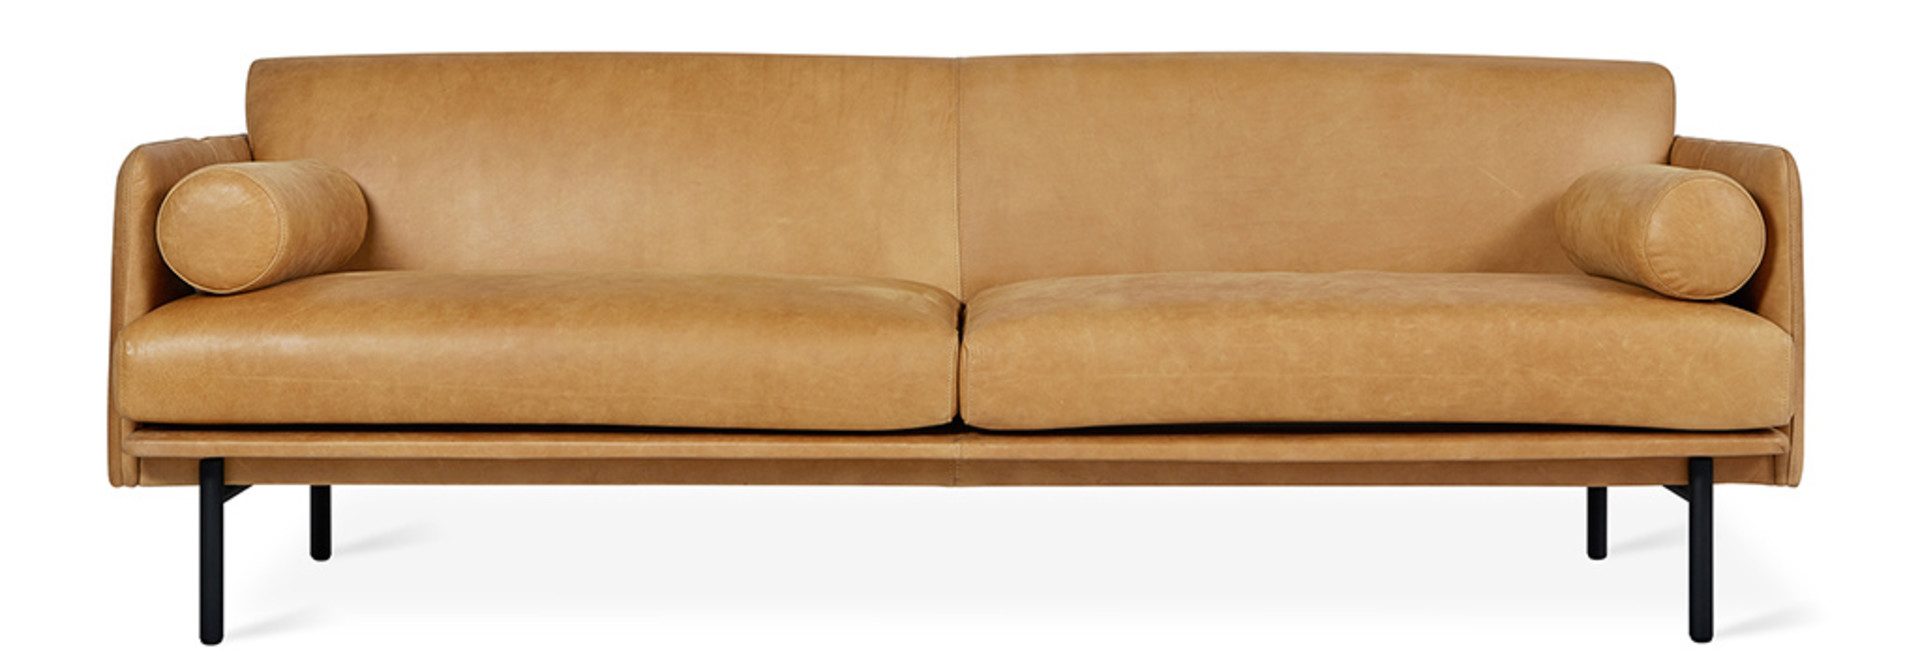 Foundry Sofa